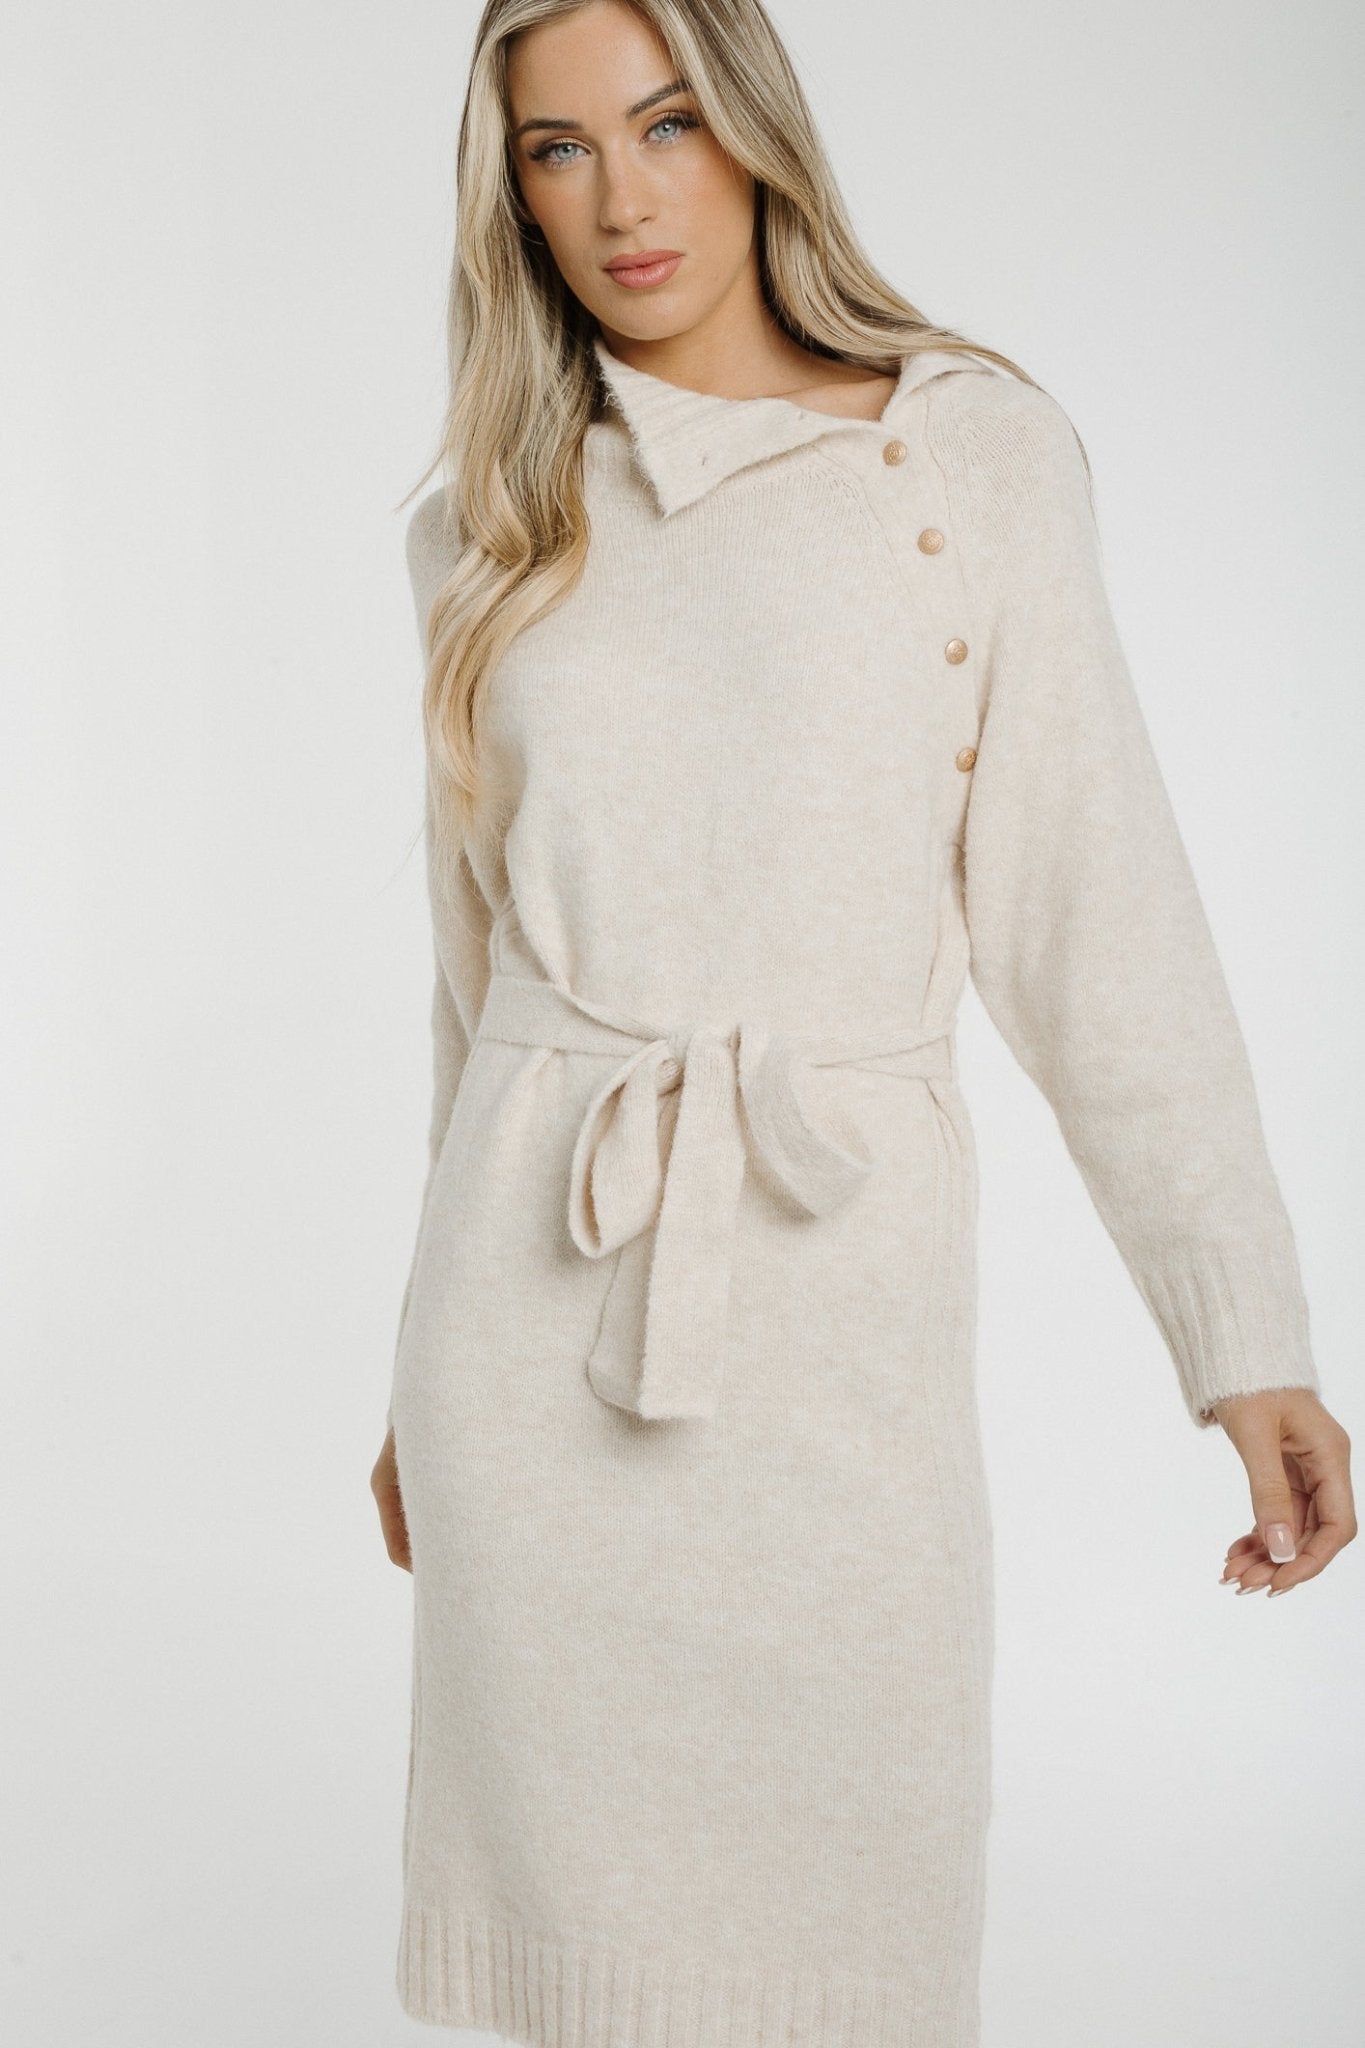 Jane Button Detail Knit Dress In Cream - The Walk in Wardrobe